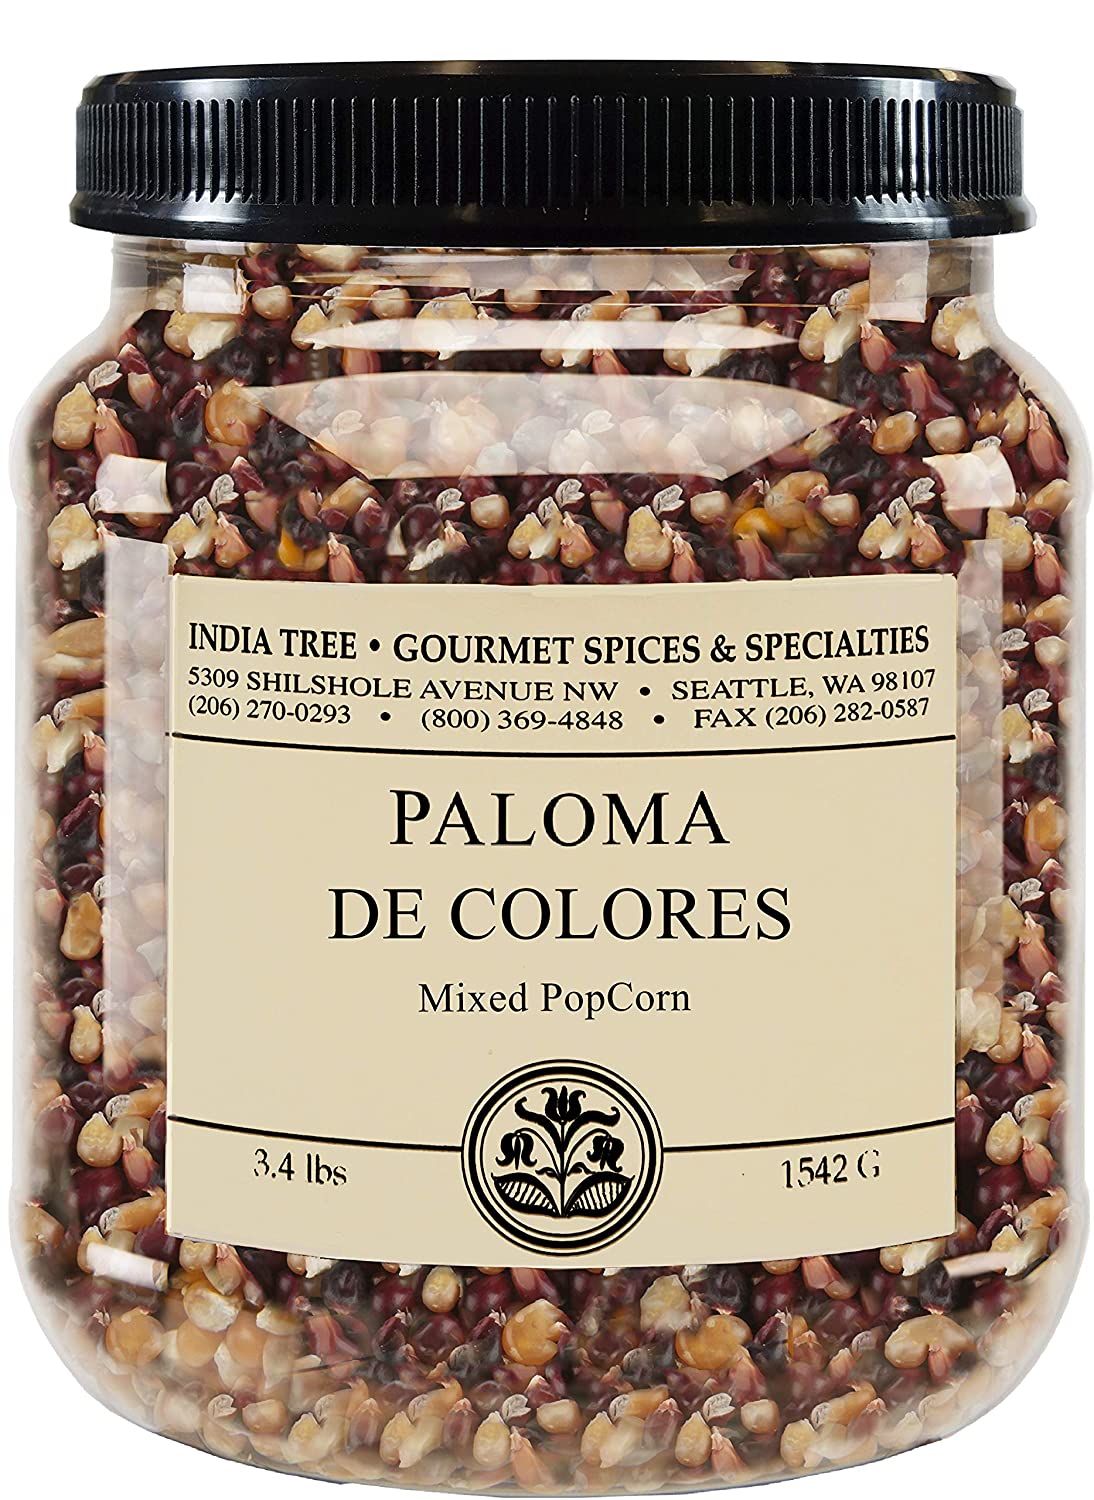 India Tree Paloma de Colores Popcorn, 3.4 lb